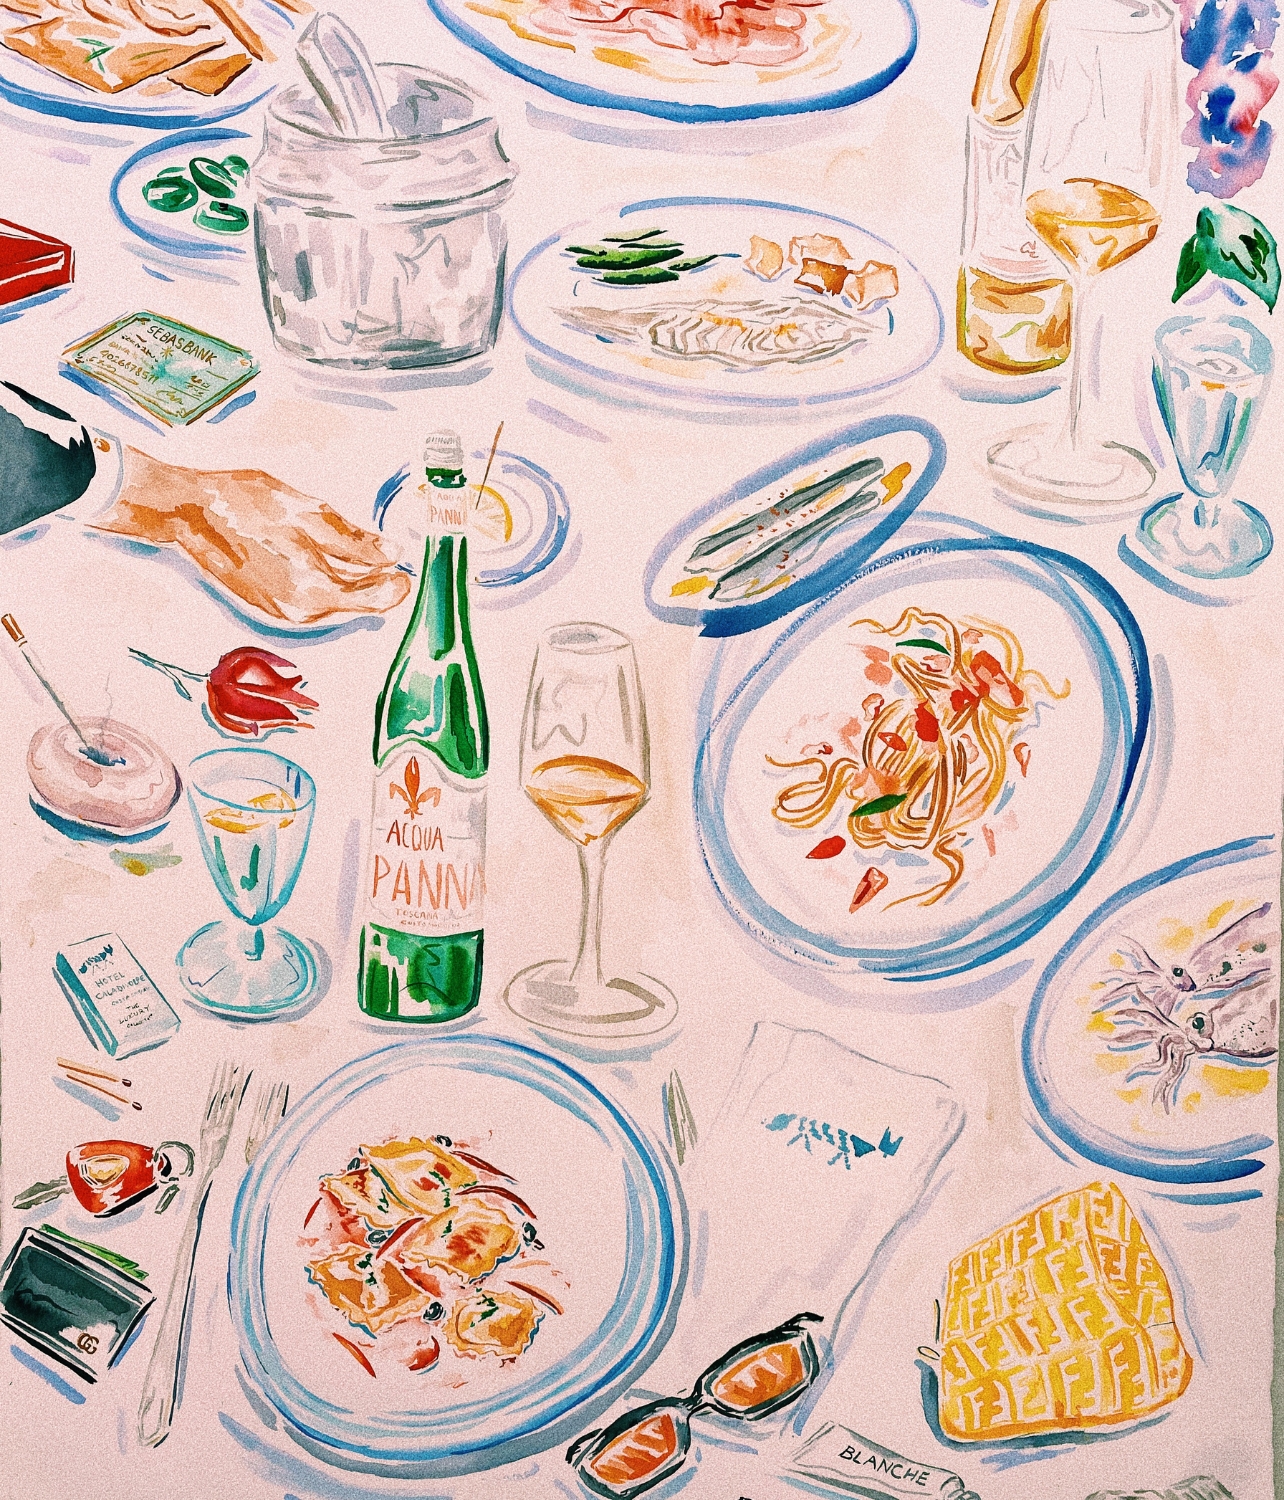 Original illustration of a family style dinner table by Sebastian Marc Graham